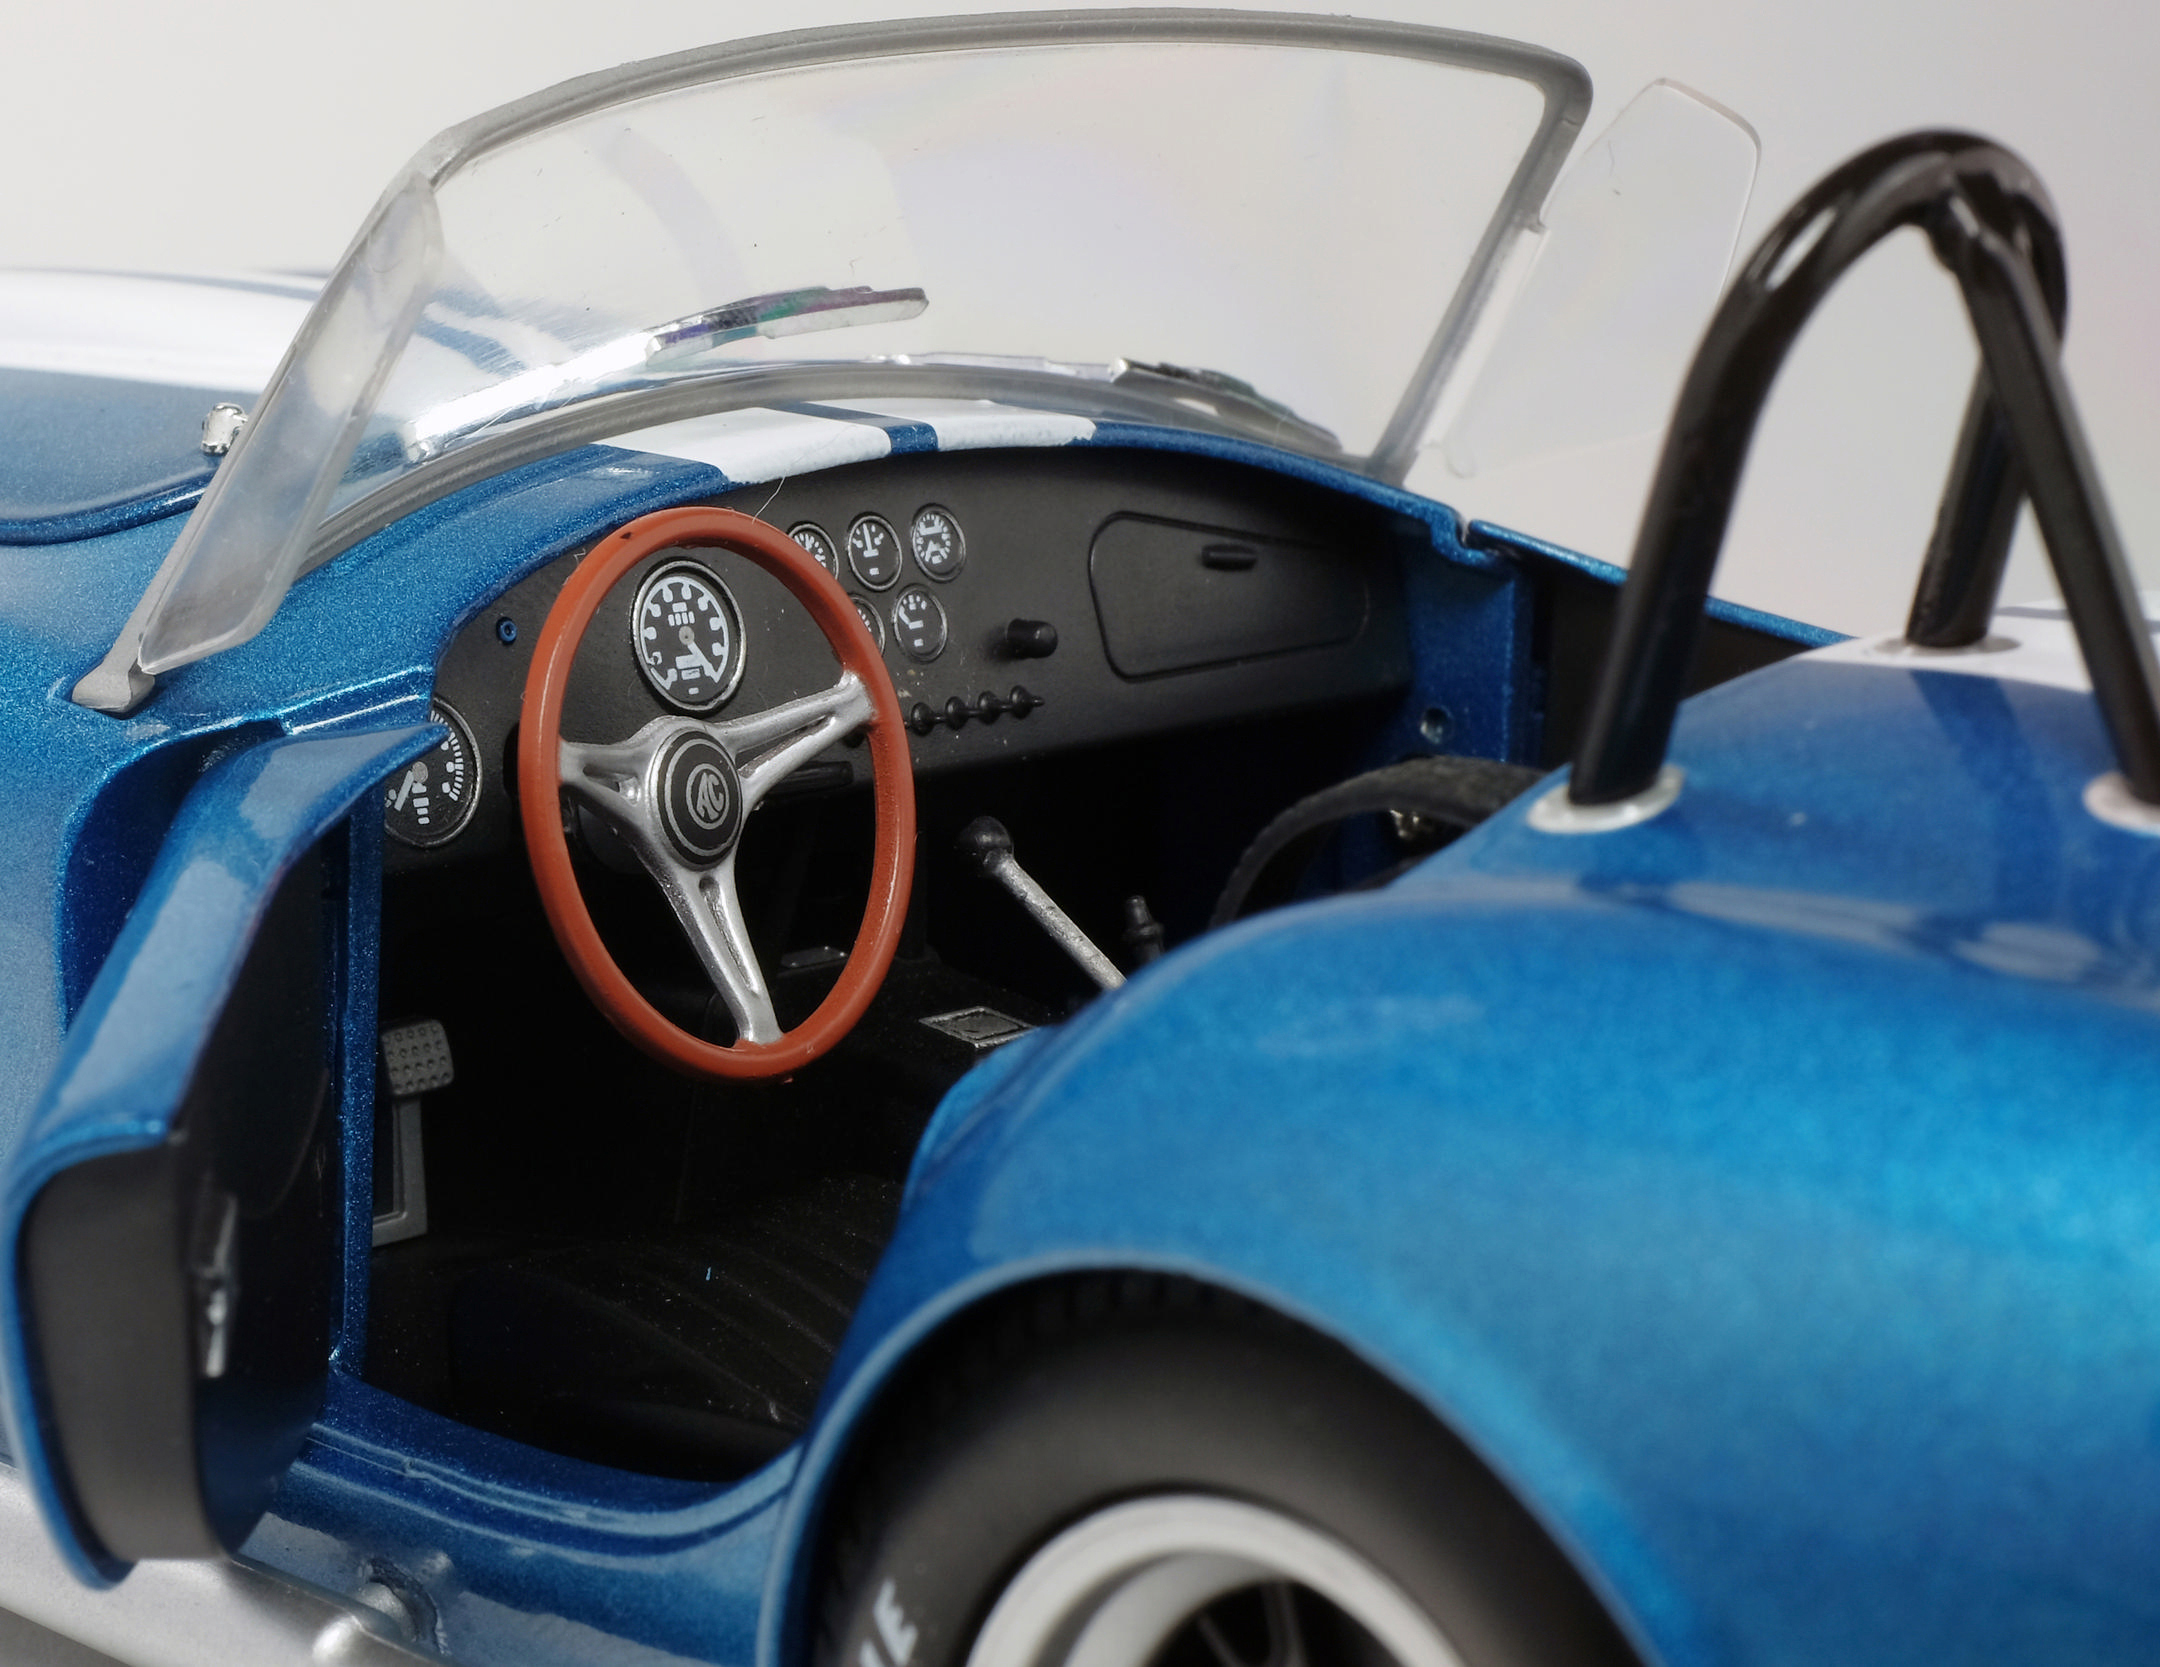 metallic 1965, Baujahr AC blau MKII, Maßstab Spielzeugmodellauto SOLIDO Cobra 1:18, Metallic/Blau Modellauto, 427